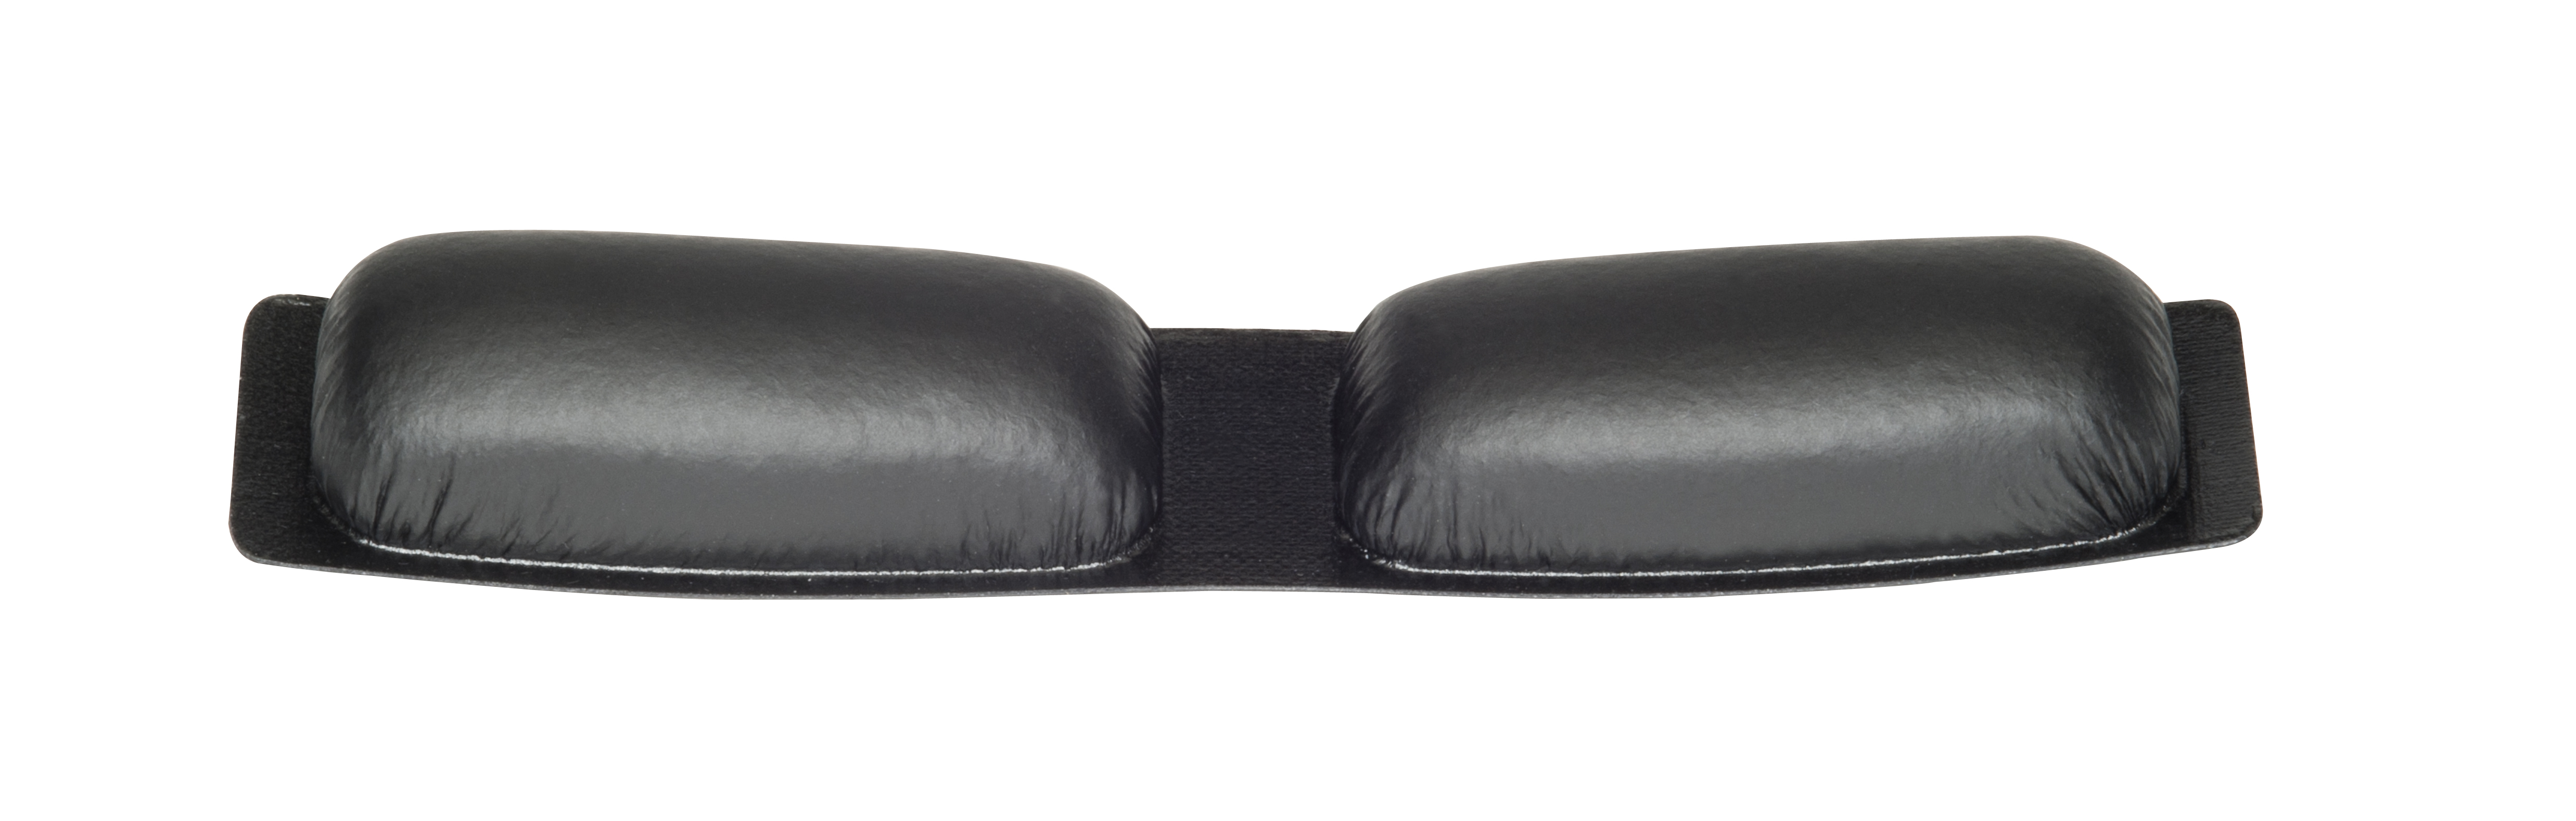 KRK KRK KNS 6400 Replacement Head Cushion